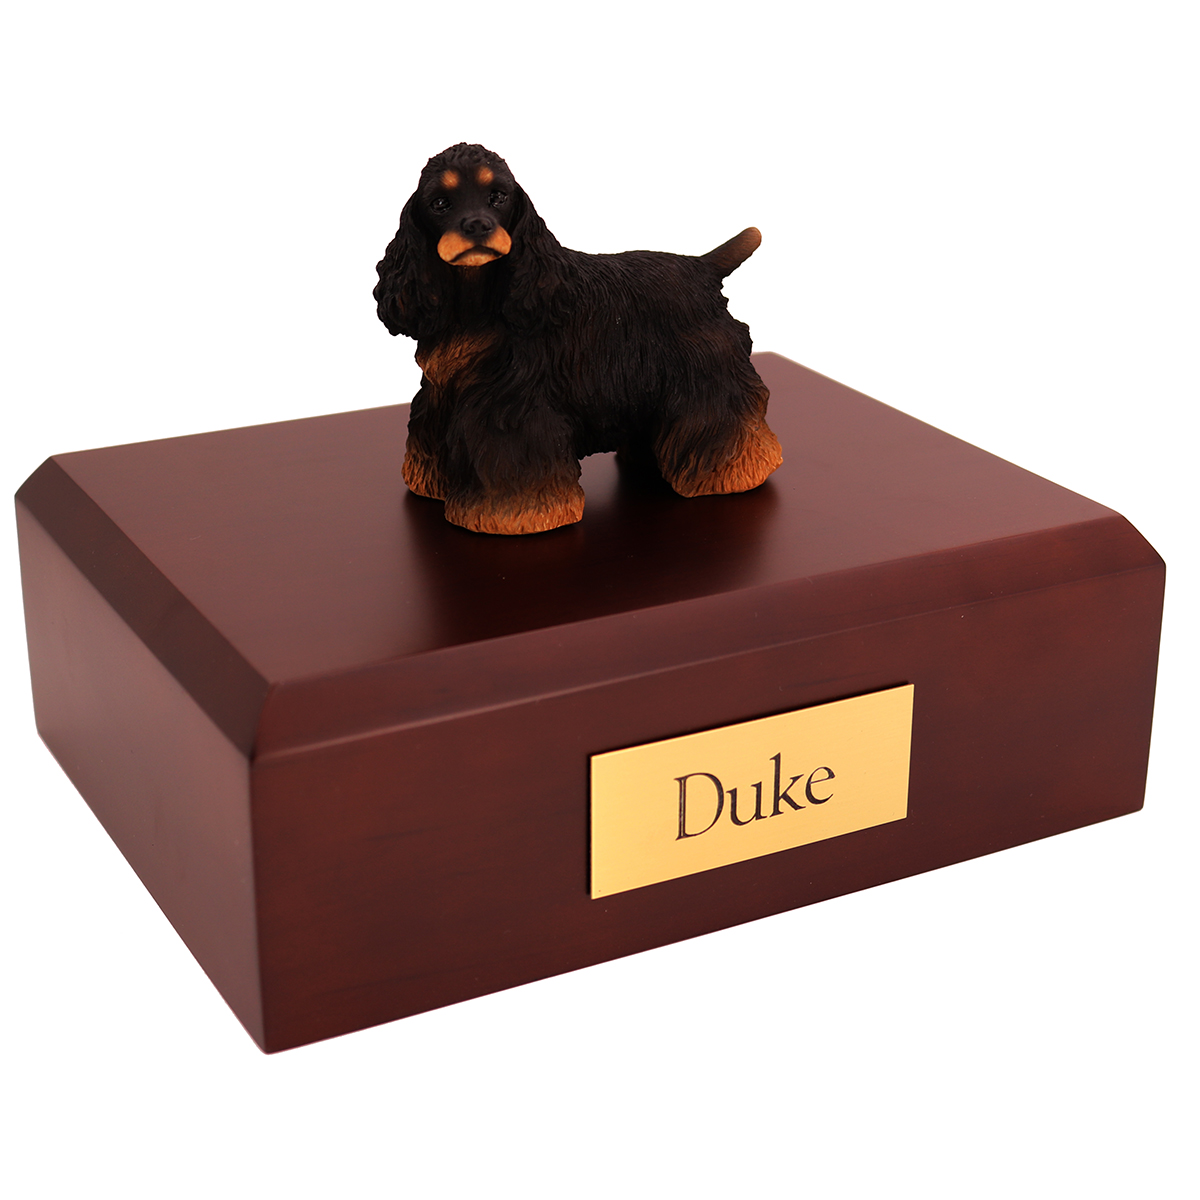 Dog, Cocker, Black/Brown - Figurine Urn